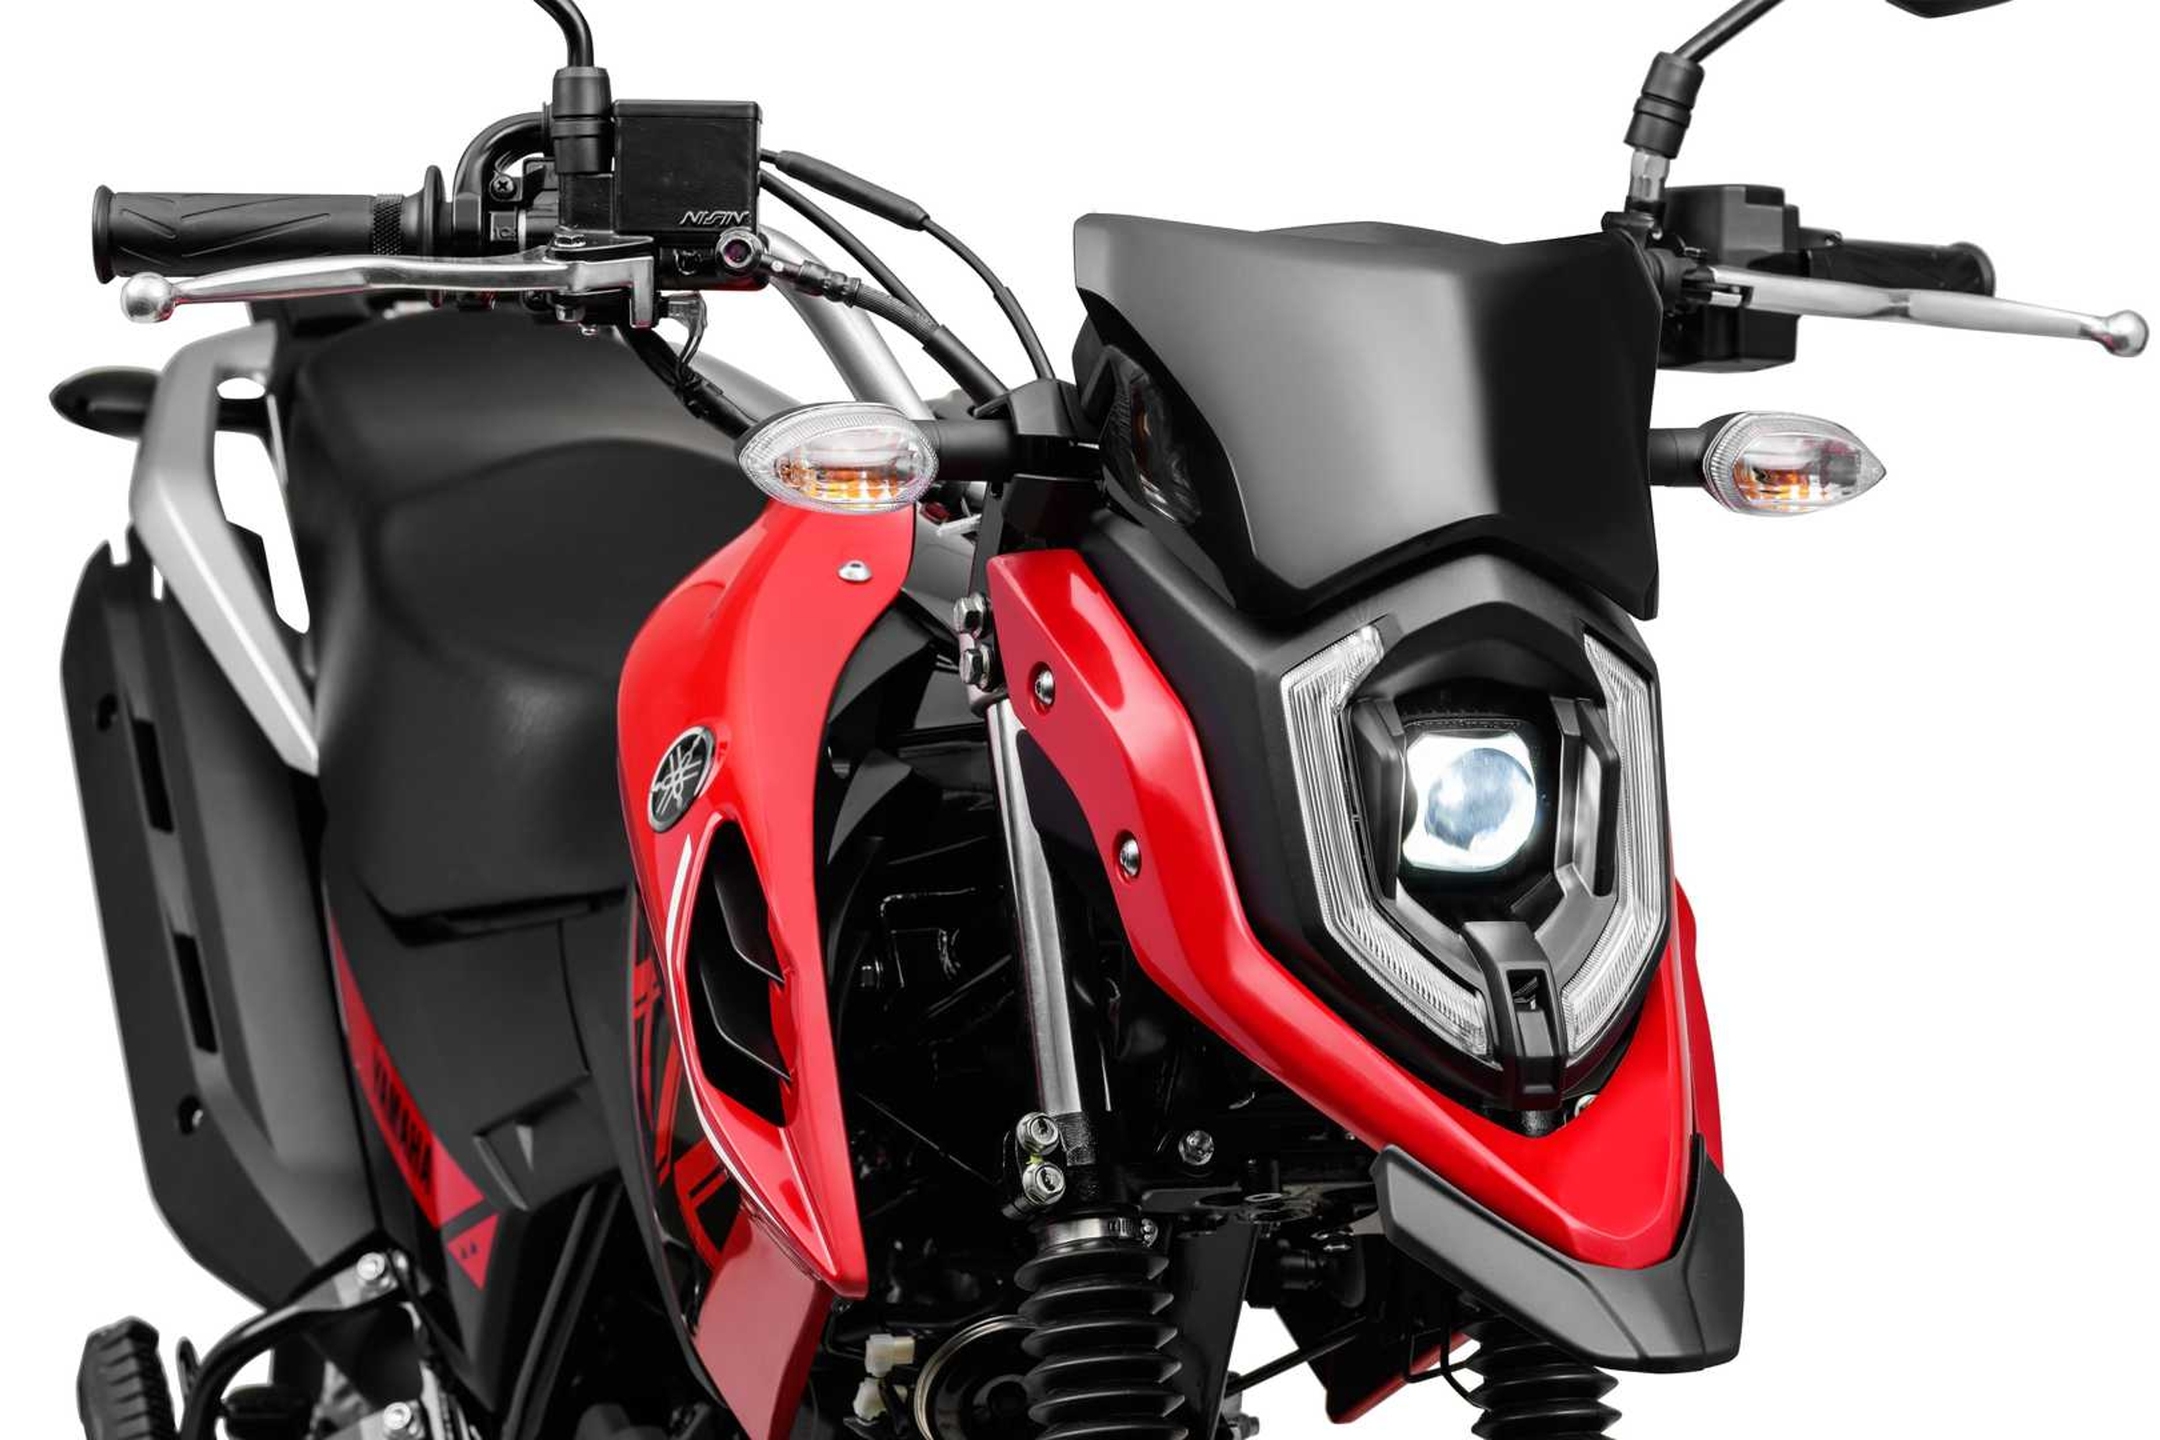 Yamaha Crosser 150 Z: nova cara, mesma moto